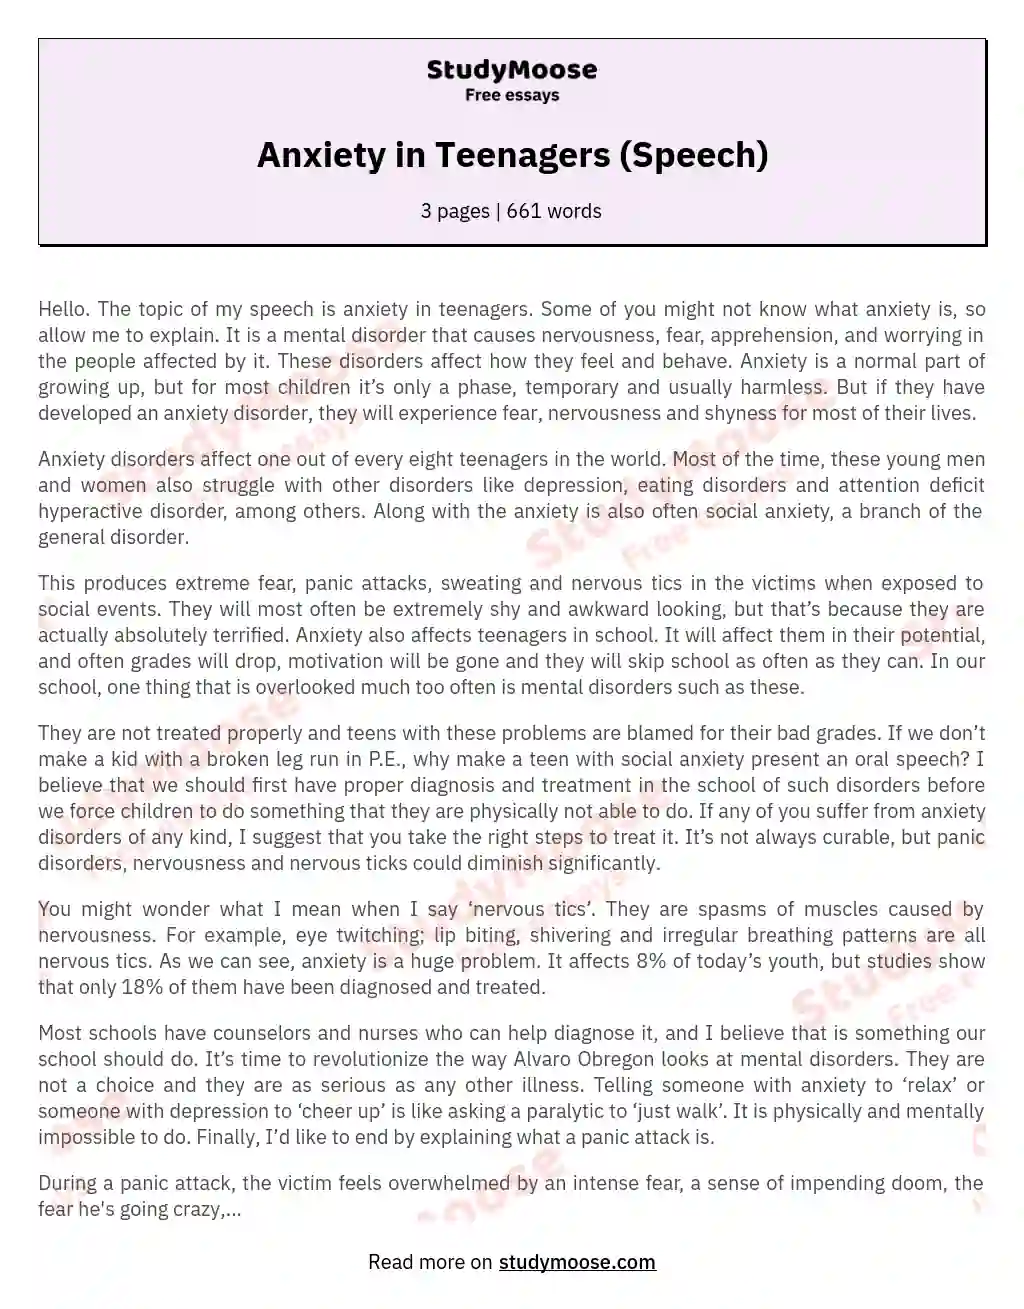 Anxiety in Teenagers (Speech) essay